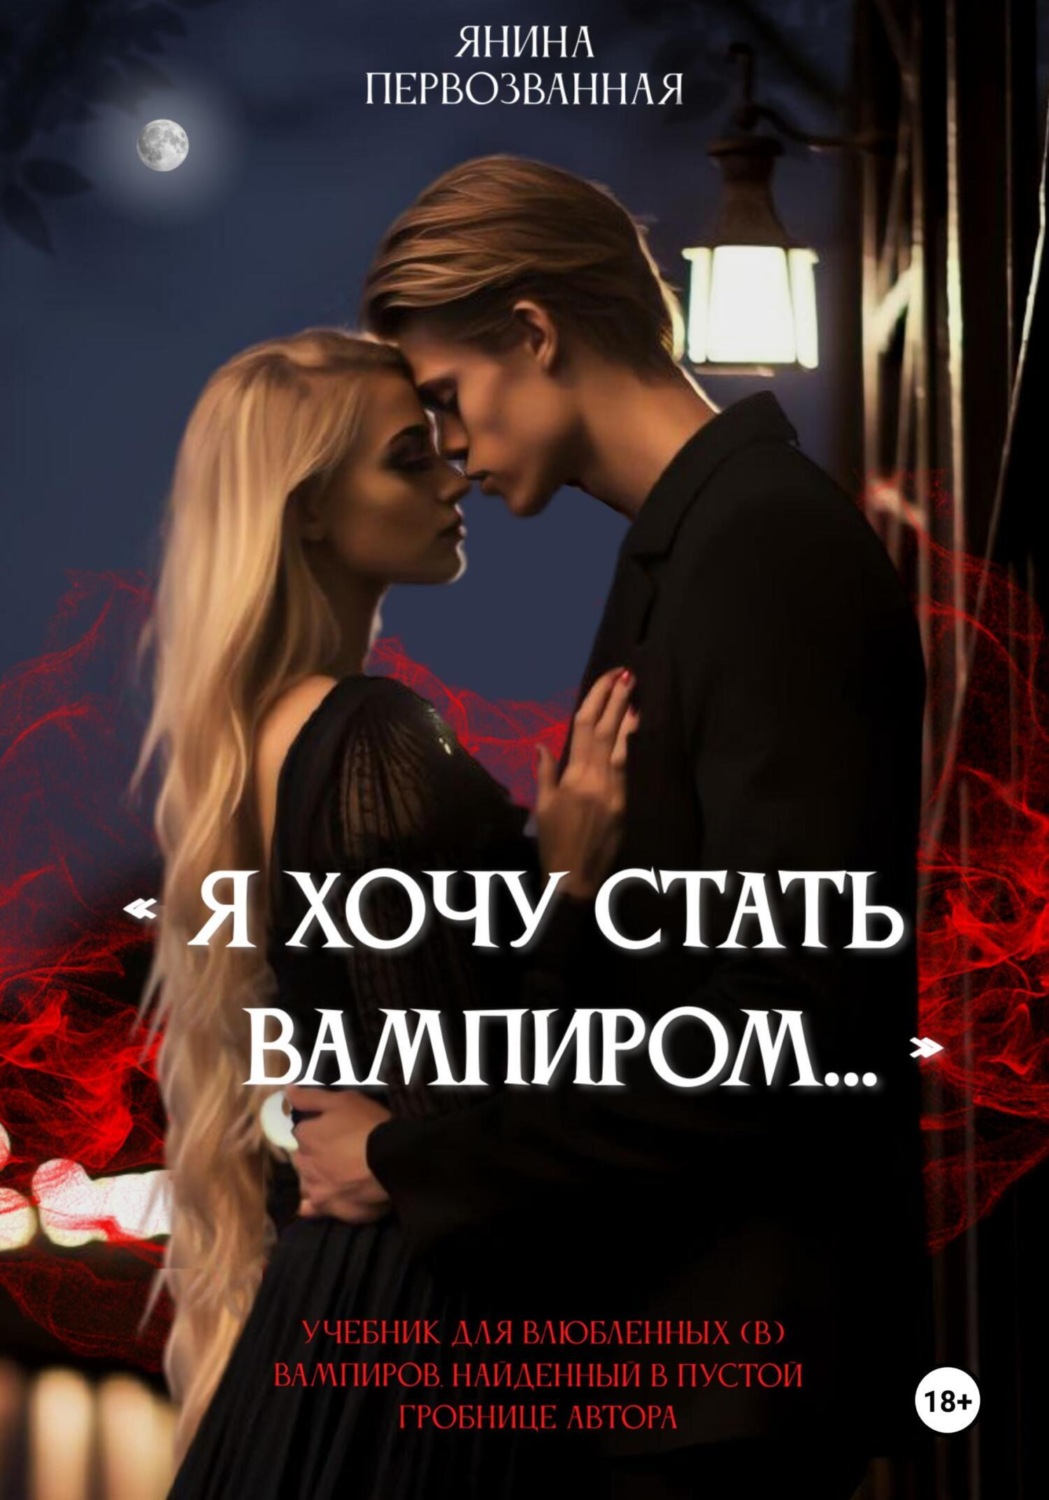 Фанфики про Вампиров. | ВКонтакте